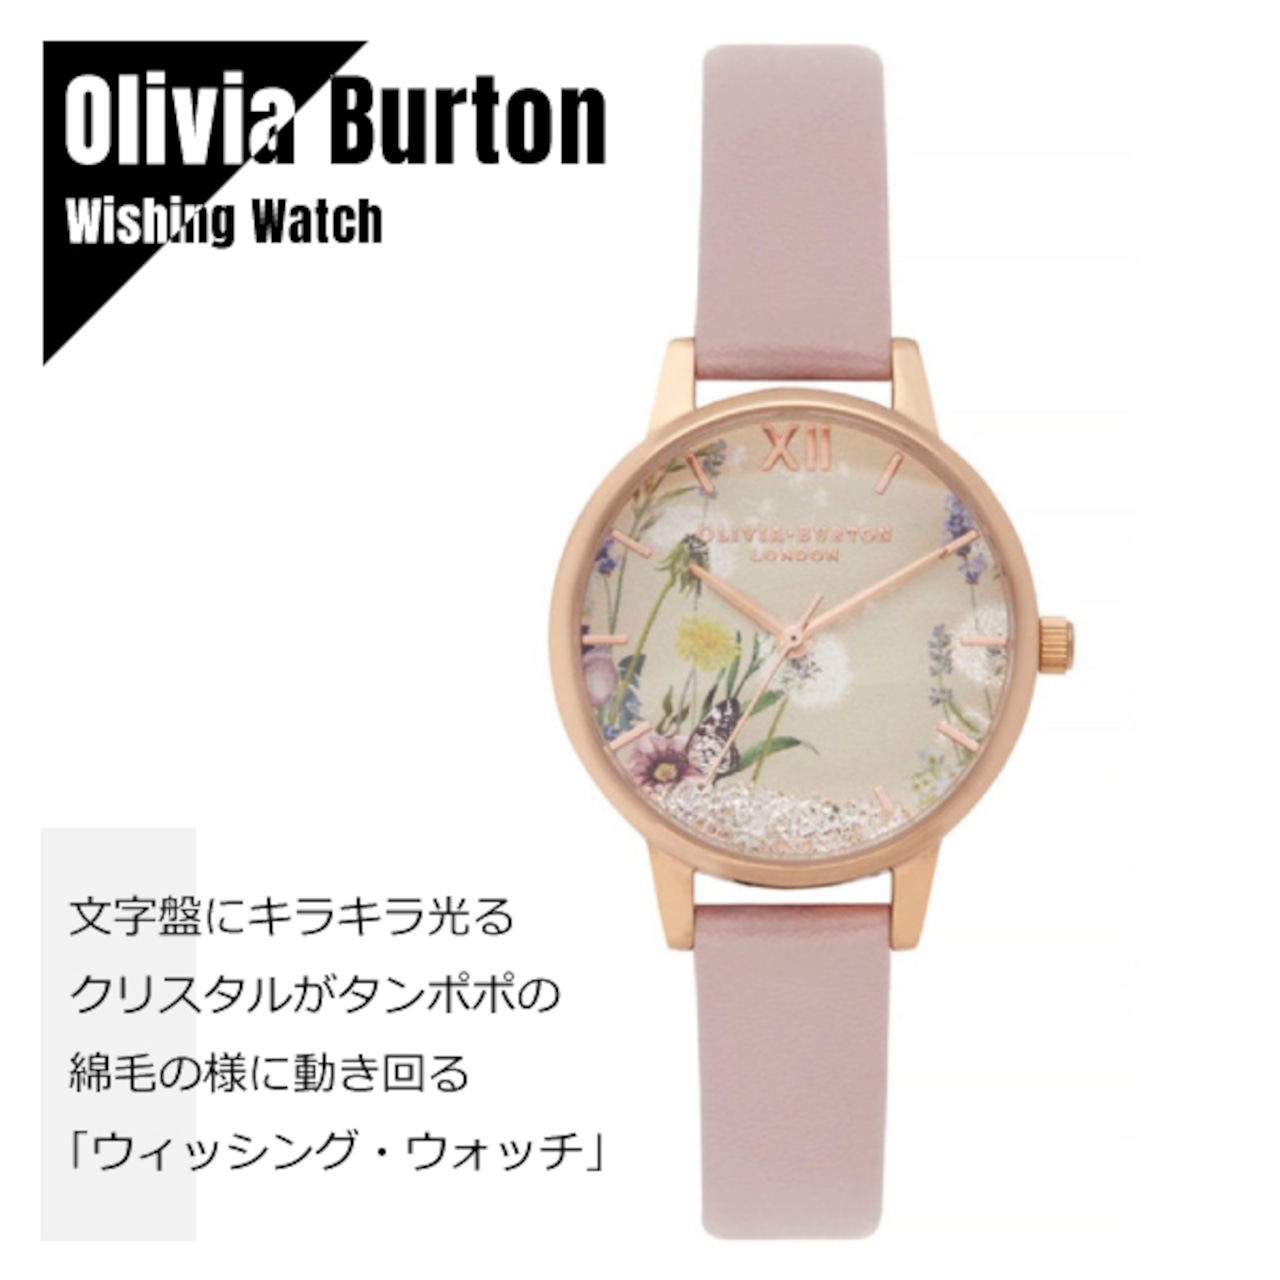 OLIVIA BURTON オリビアバートン Wishing Watch Midi ウィッシングウォッチ OB16SG04 シルバーサンレイ×バーガンローズサンド 腕時計 レディース